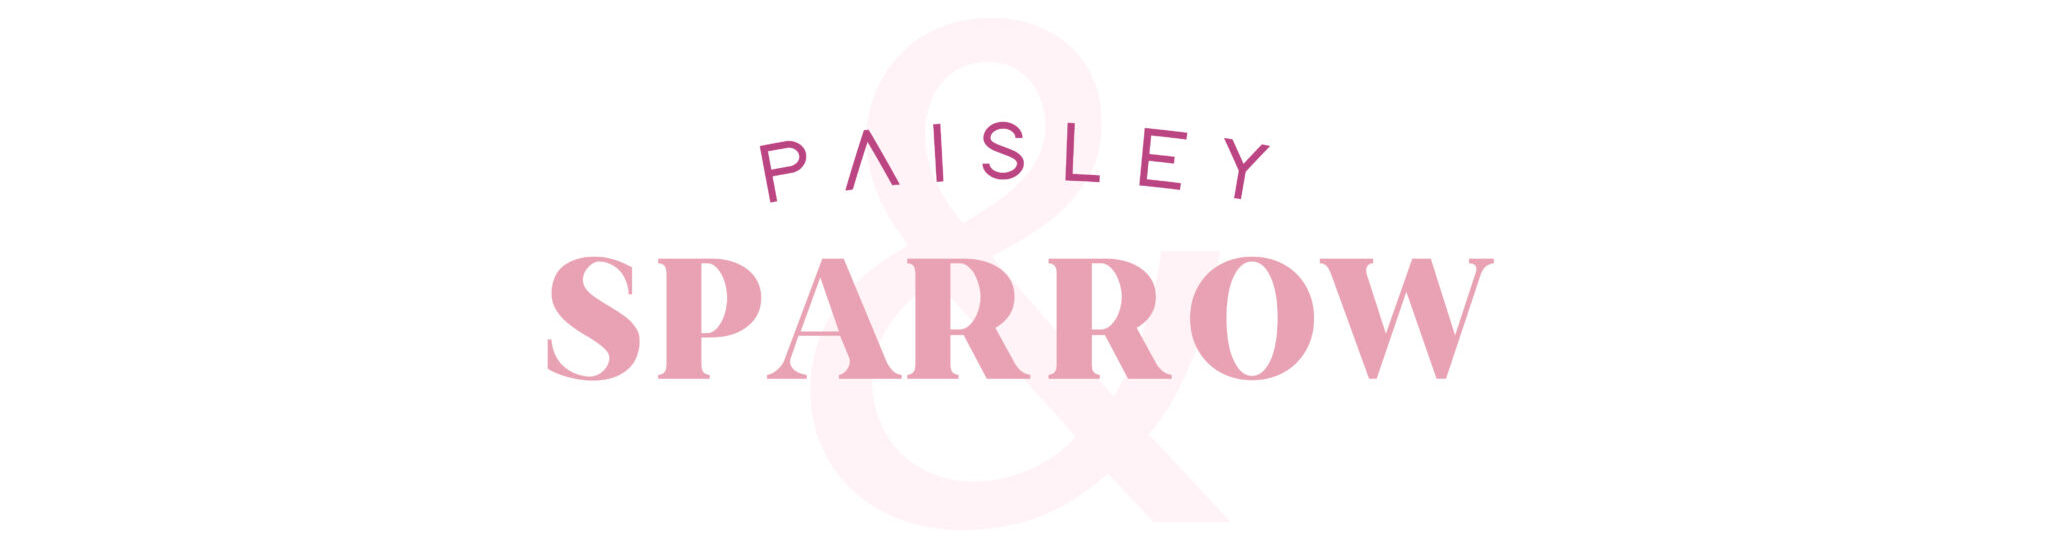 Paisley & Sparrow